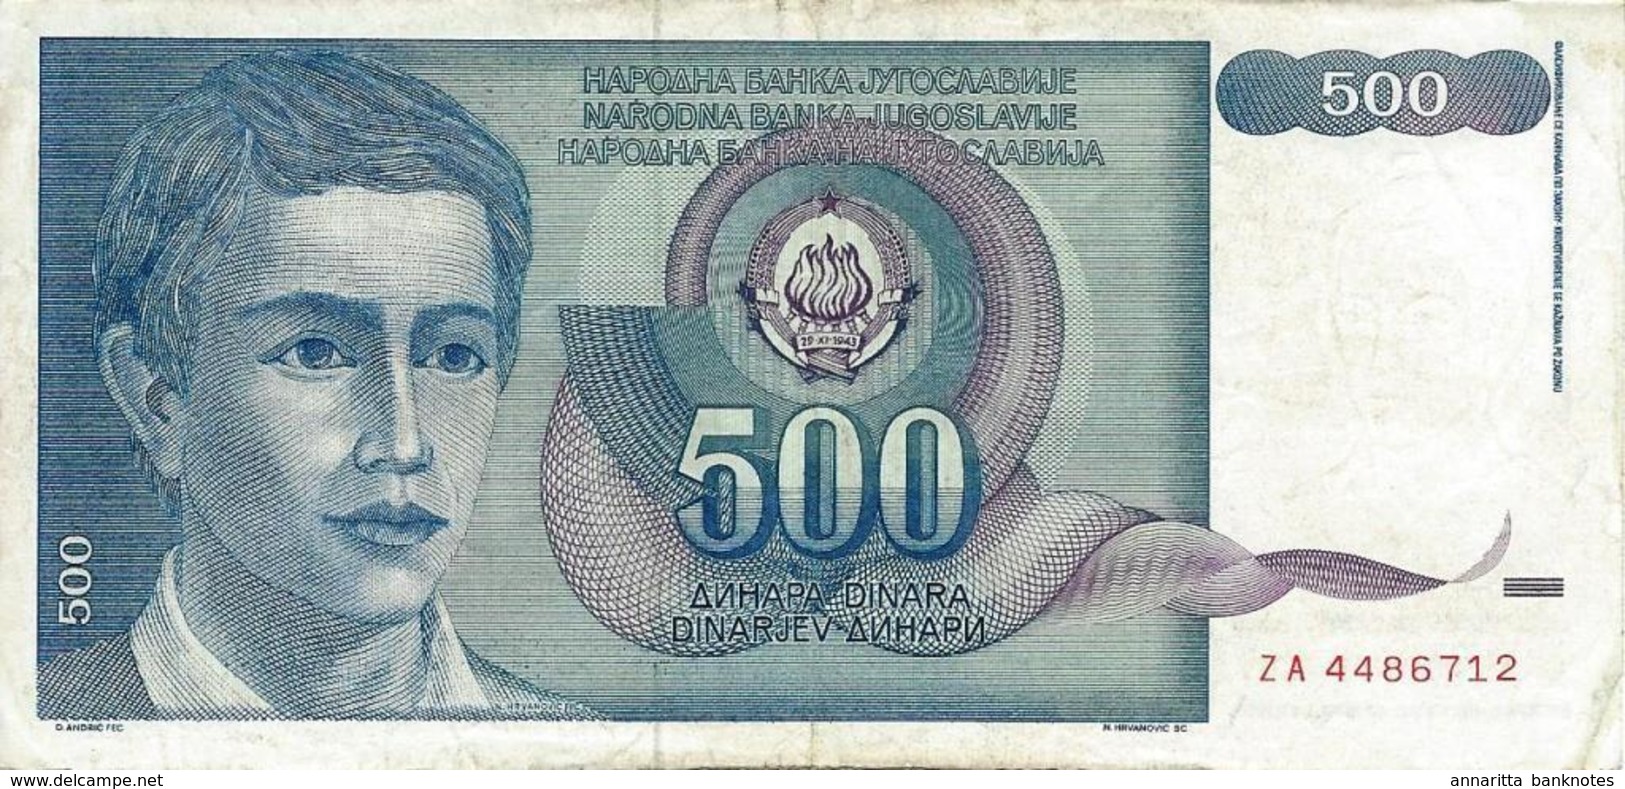 YUGOSLAVIA 500 DINARA 1990 P-106r VF REPLACEMENT S/N ZA 4486712 [YU106rep] - Jugoslawien